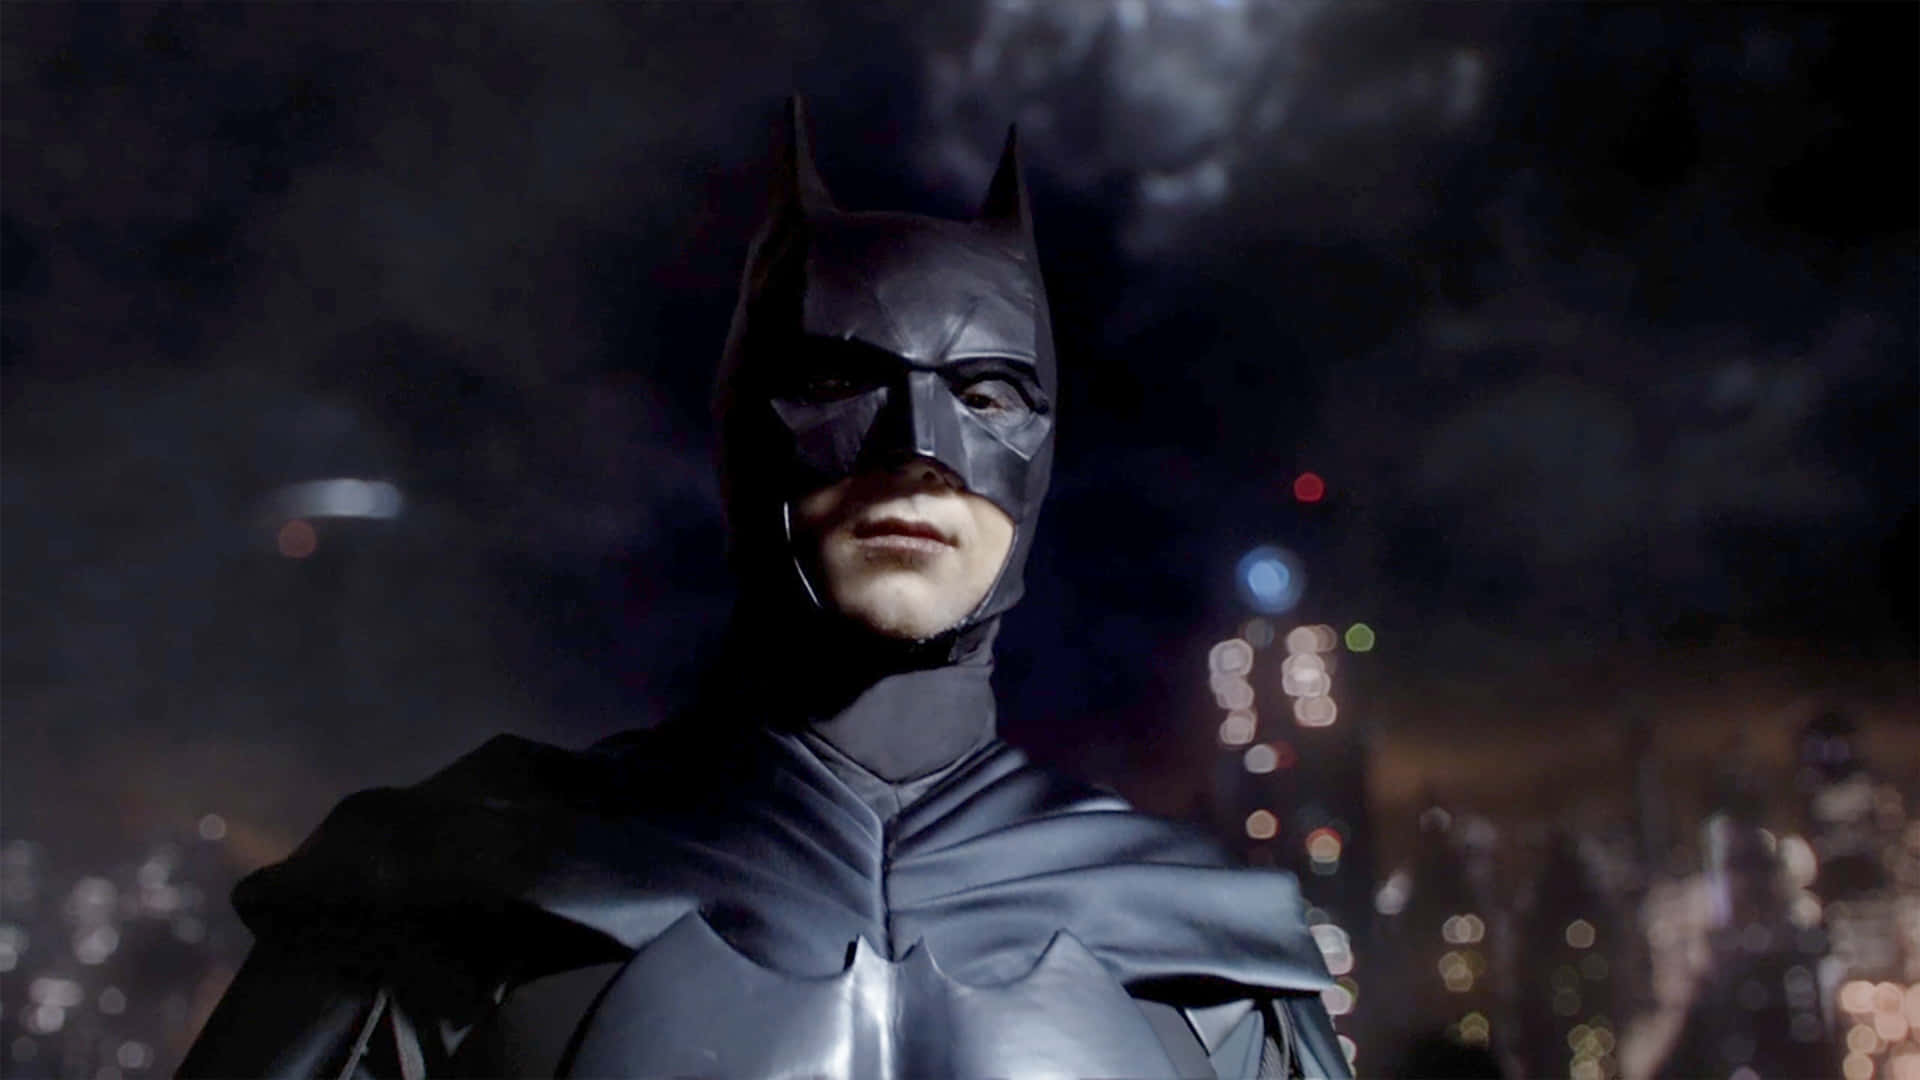 The Dark Knight's Bat-suit in action Wallpaper